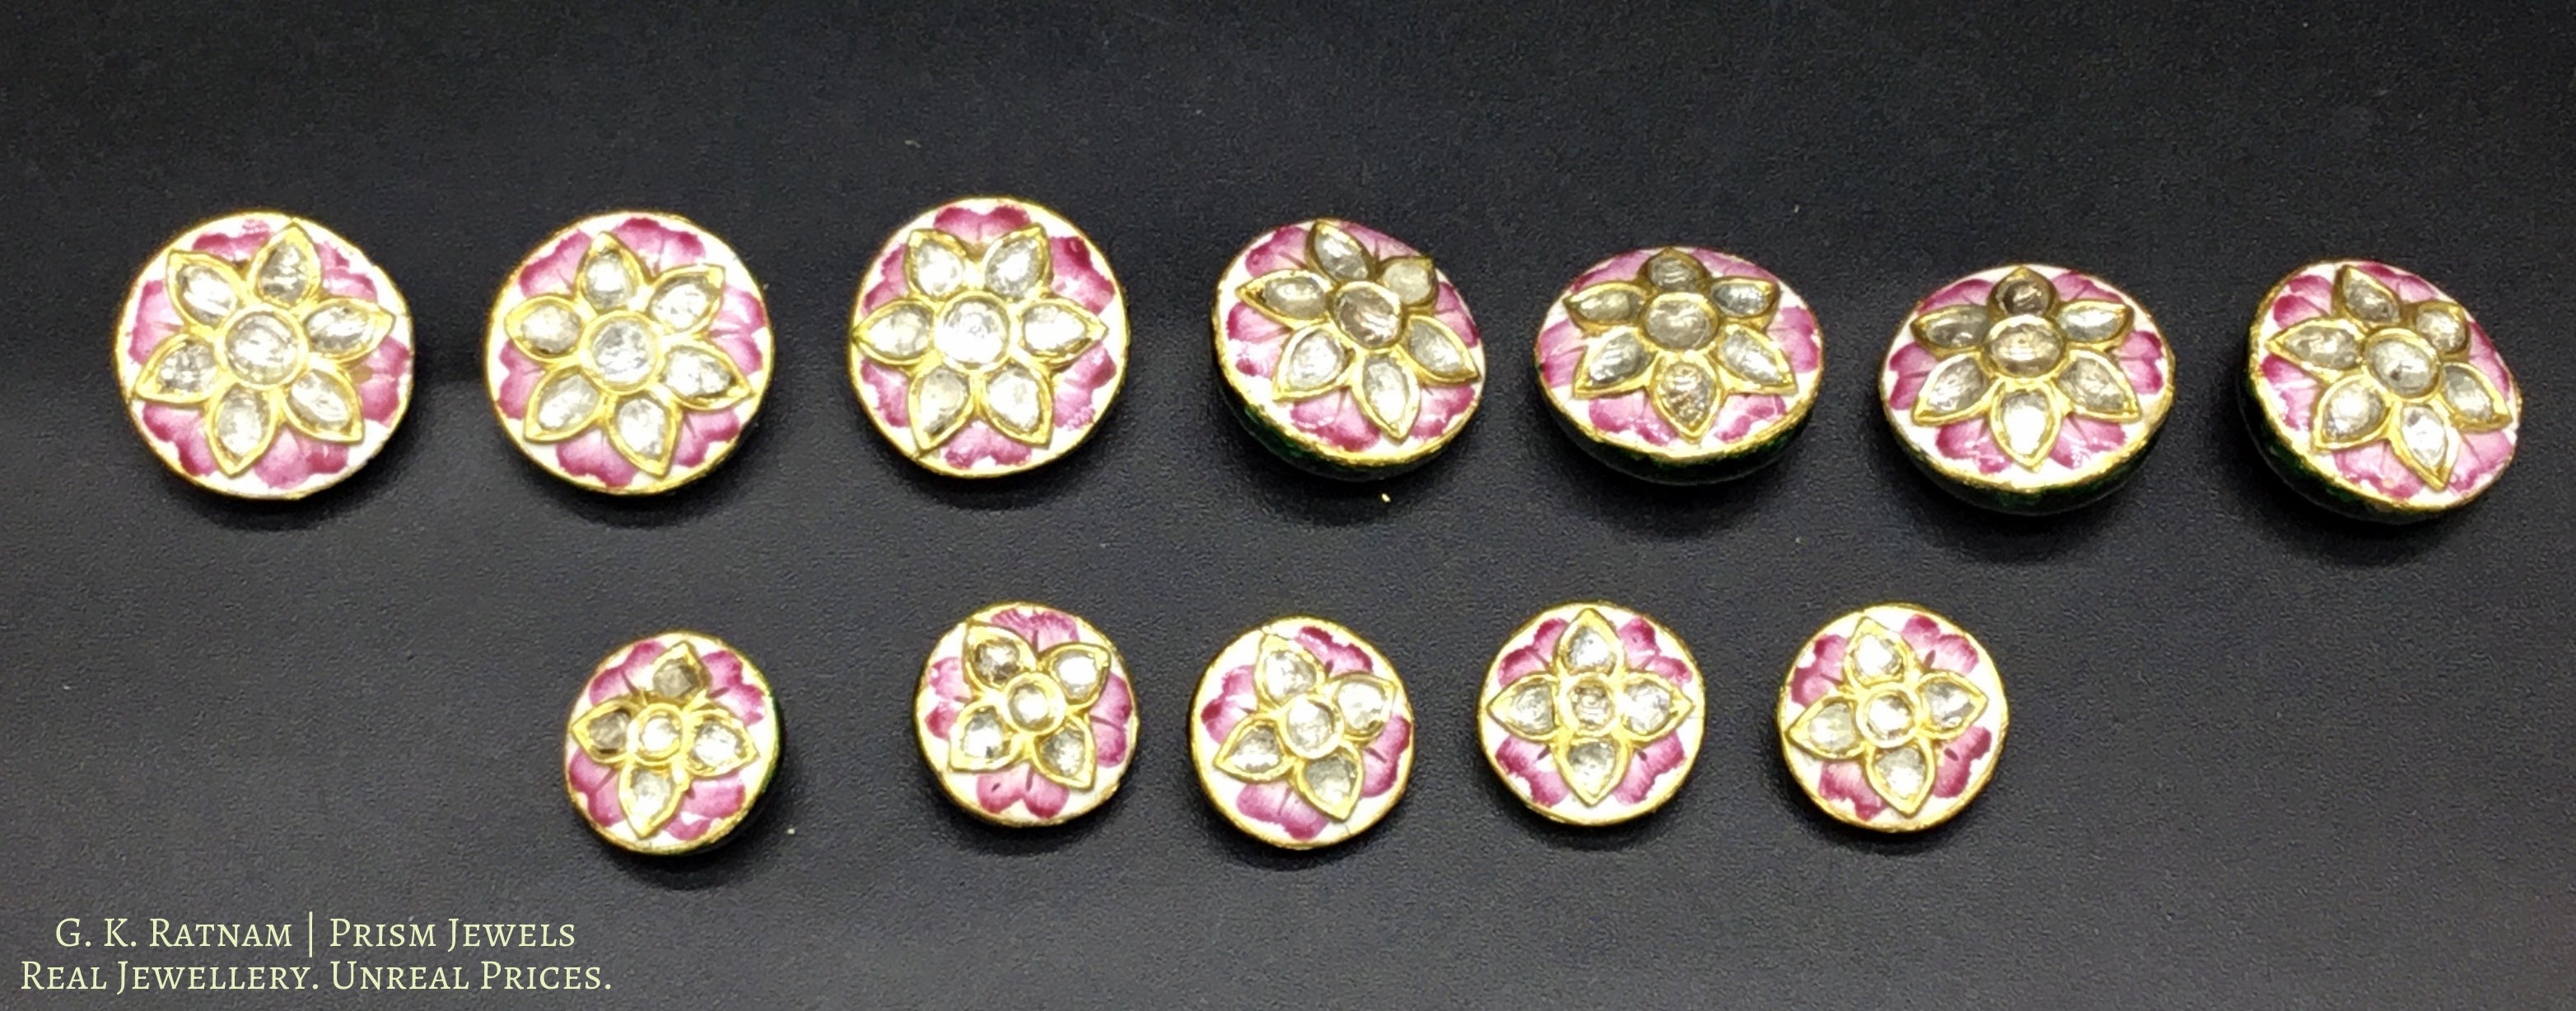 23k Gold and Diamond Polki pink enamel Sherwani Buttons for Men - gold diamond polki kundan meena jadau jewellery